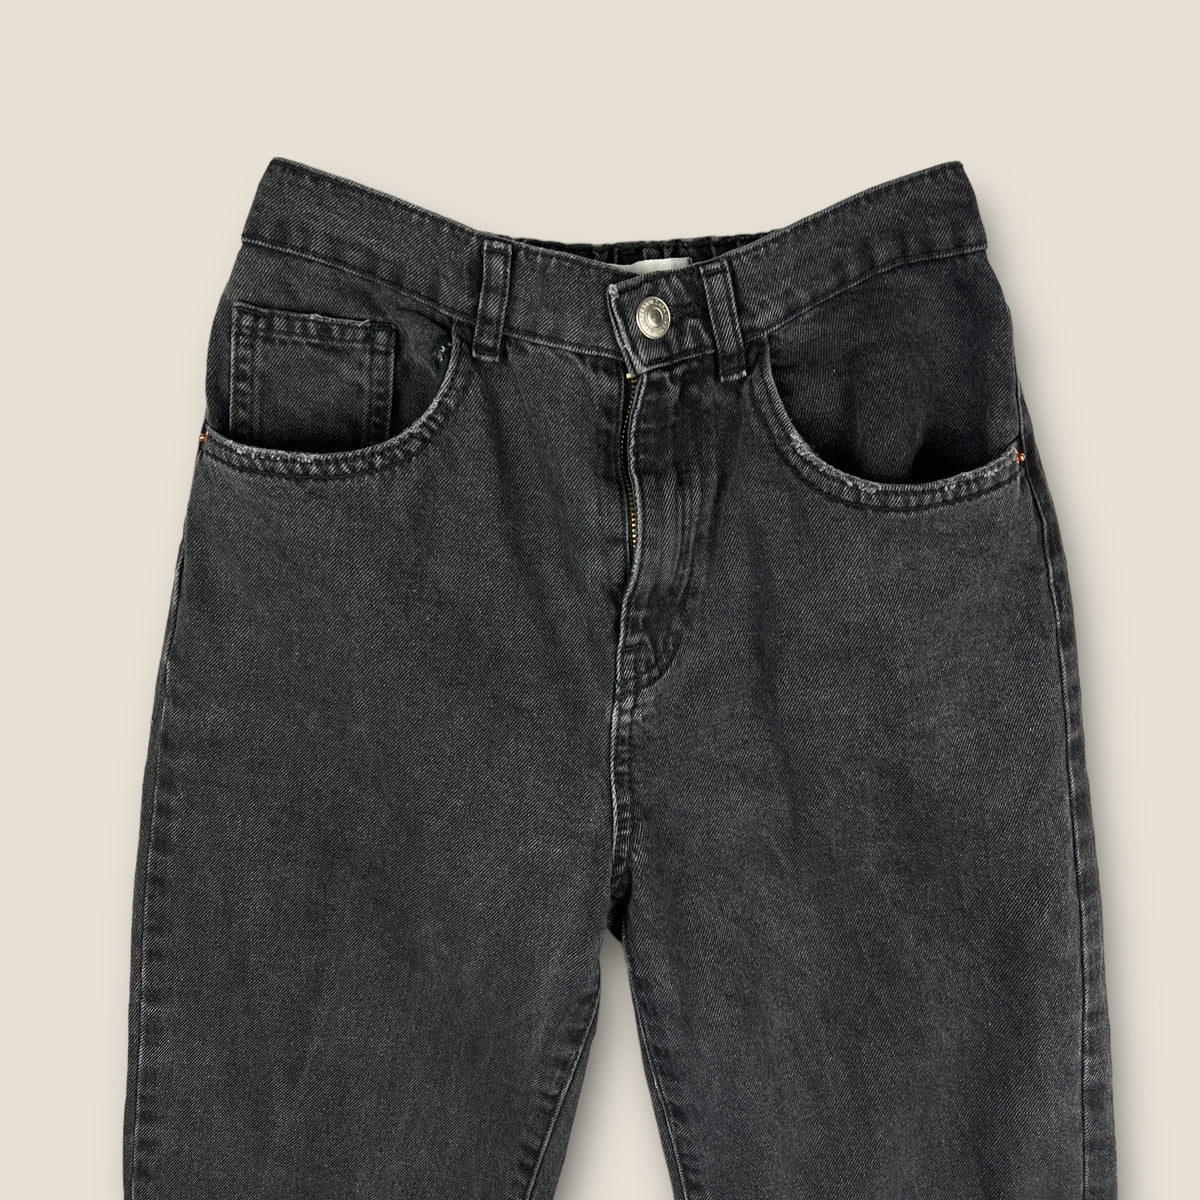 Zara Jeans size 11-12 years